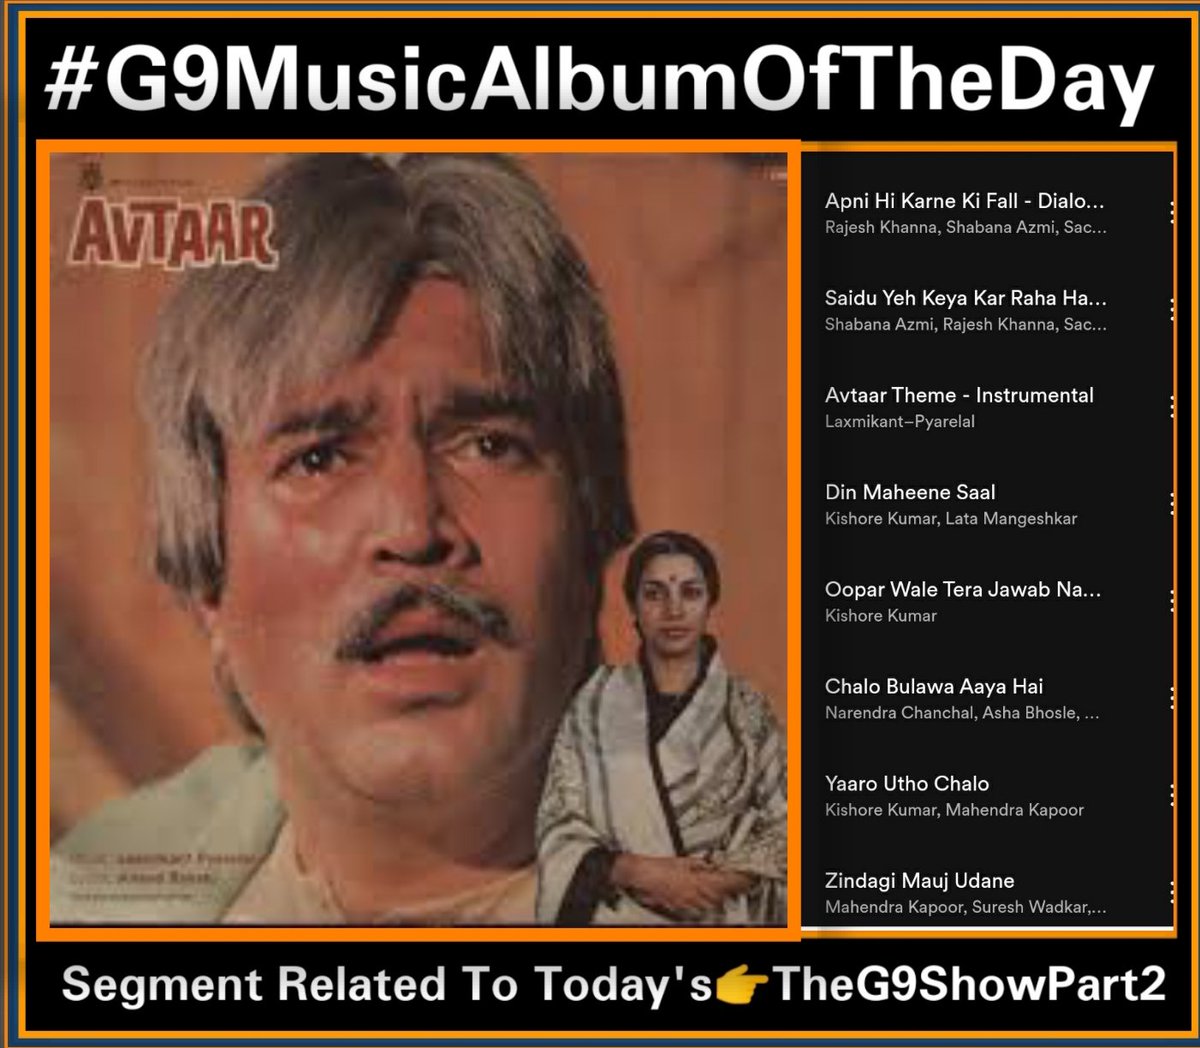 #G9MusicAlbumOfTheDay📼
👉#Avtaar(1983) 

🎬 #RajeshKhanna
🎬 @AzmiShabana
🎬 @GulshanGroverGG
🎬 #Sachin

🎼 #LaxmiPyare 
📽#AnandBakshi

Thanx #RJG9DivyaSolgama Sir for including this #MusicalSegment in today's 
#TheG9ShowPART2📻

🕰3pm-4pm(Mon-Fri)
👉#Mum 91.9FM
👉#Kol 94.3FM